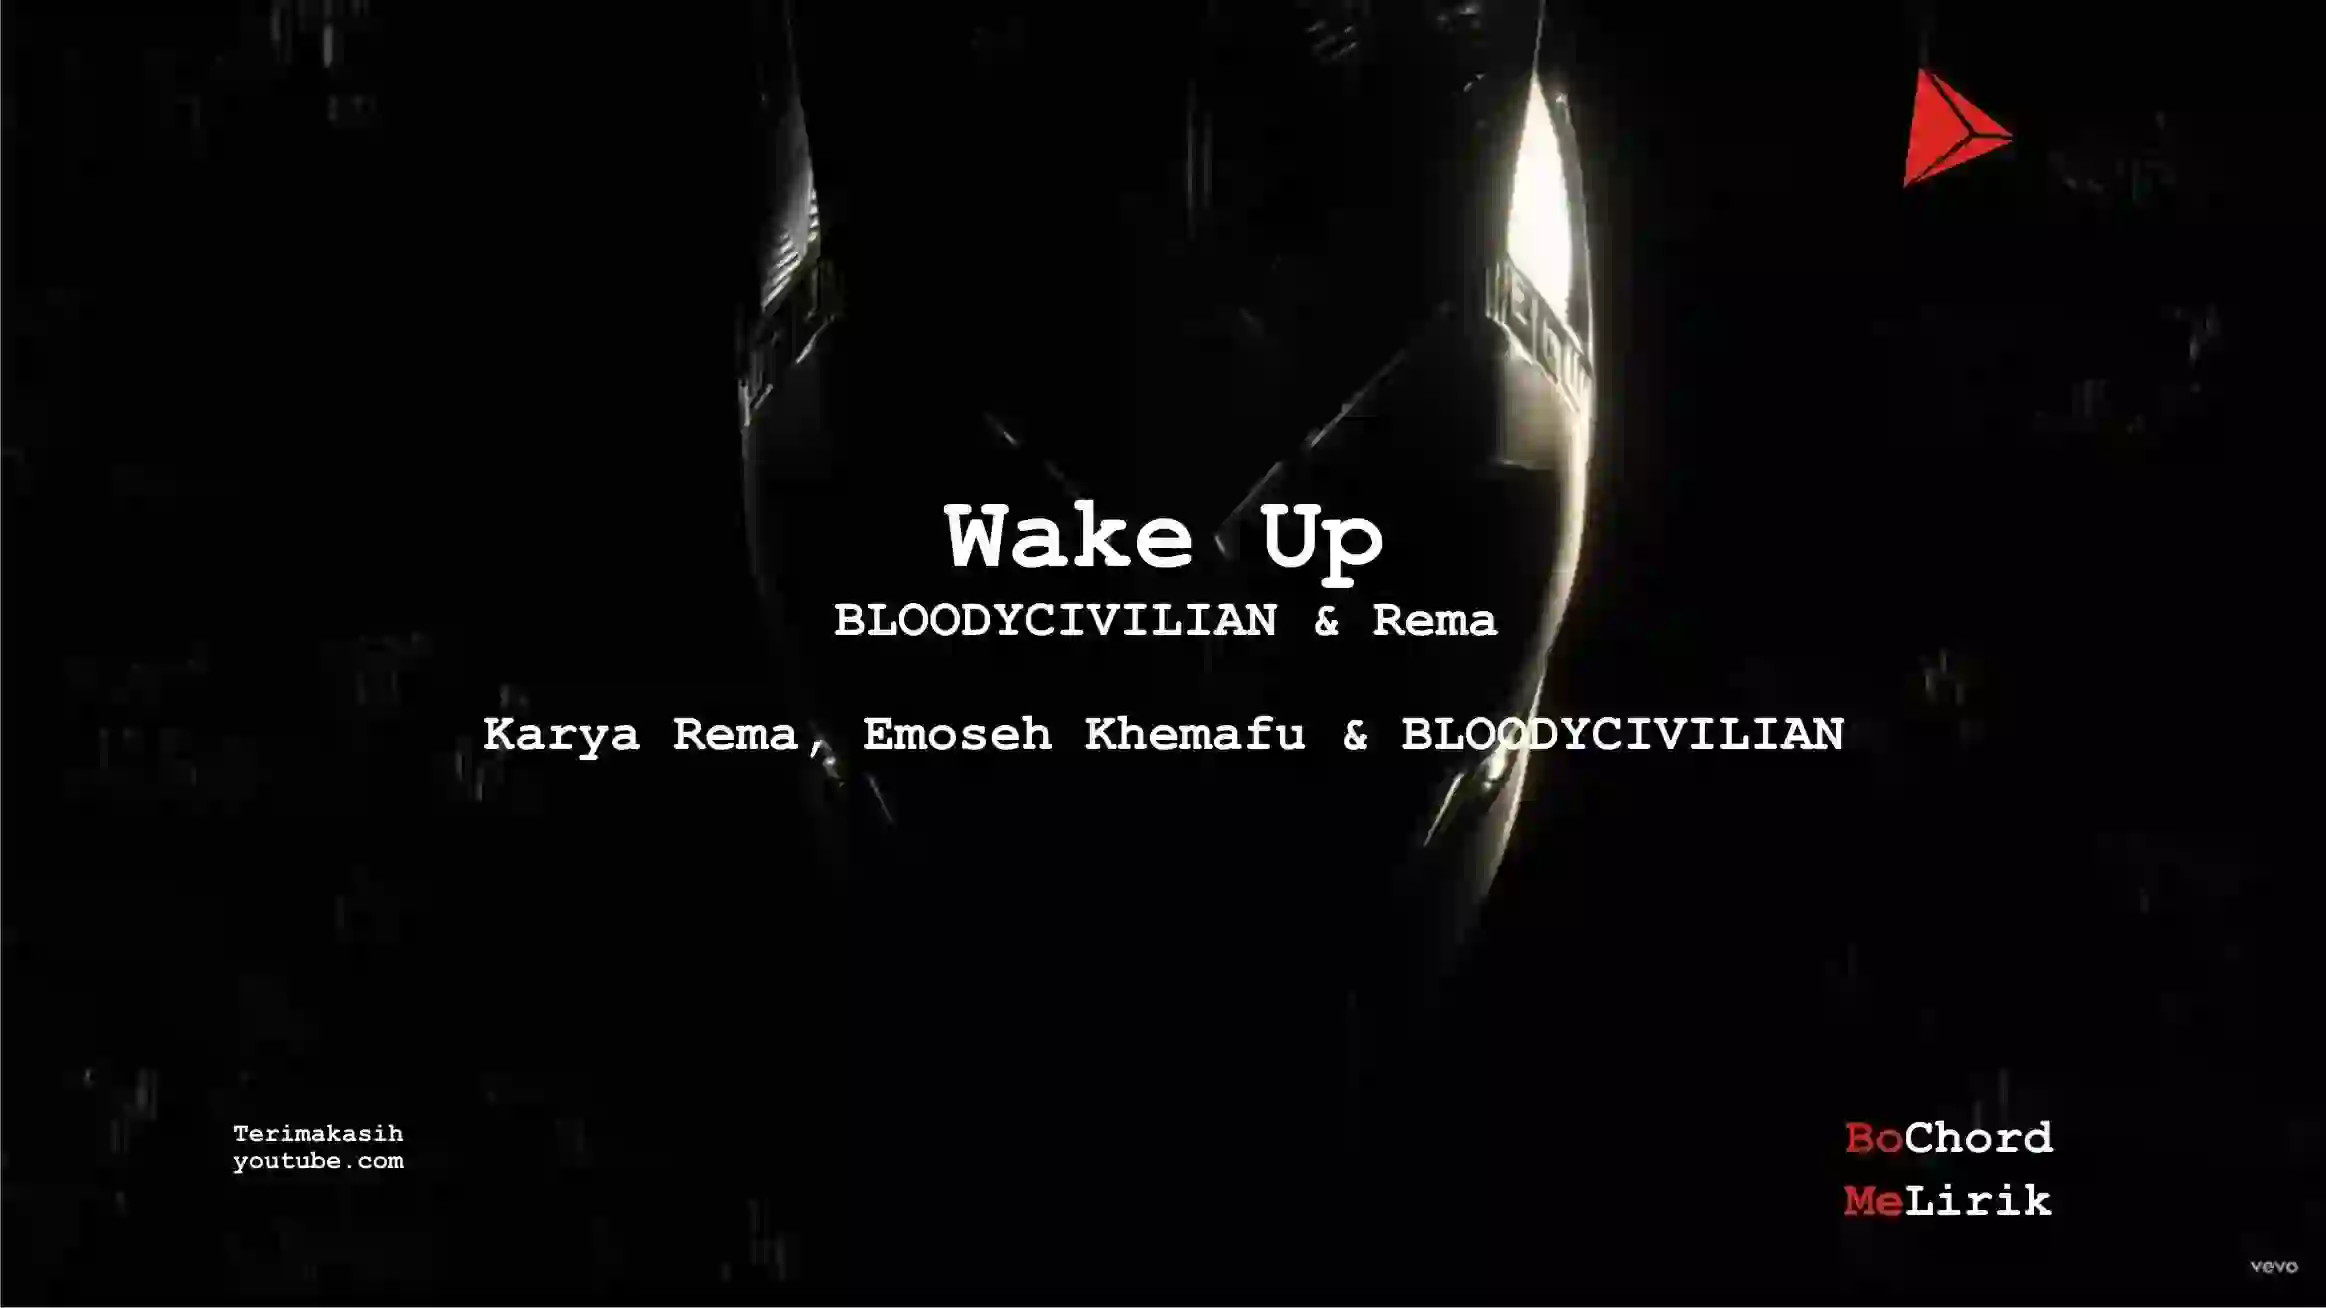 Me Lirik Wake Up | Bloody Civilian & Rema